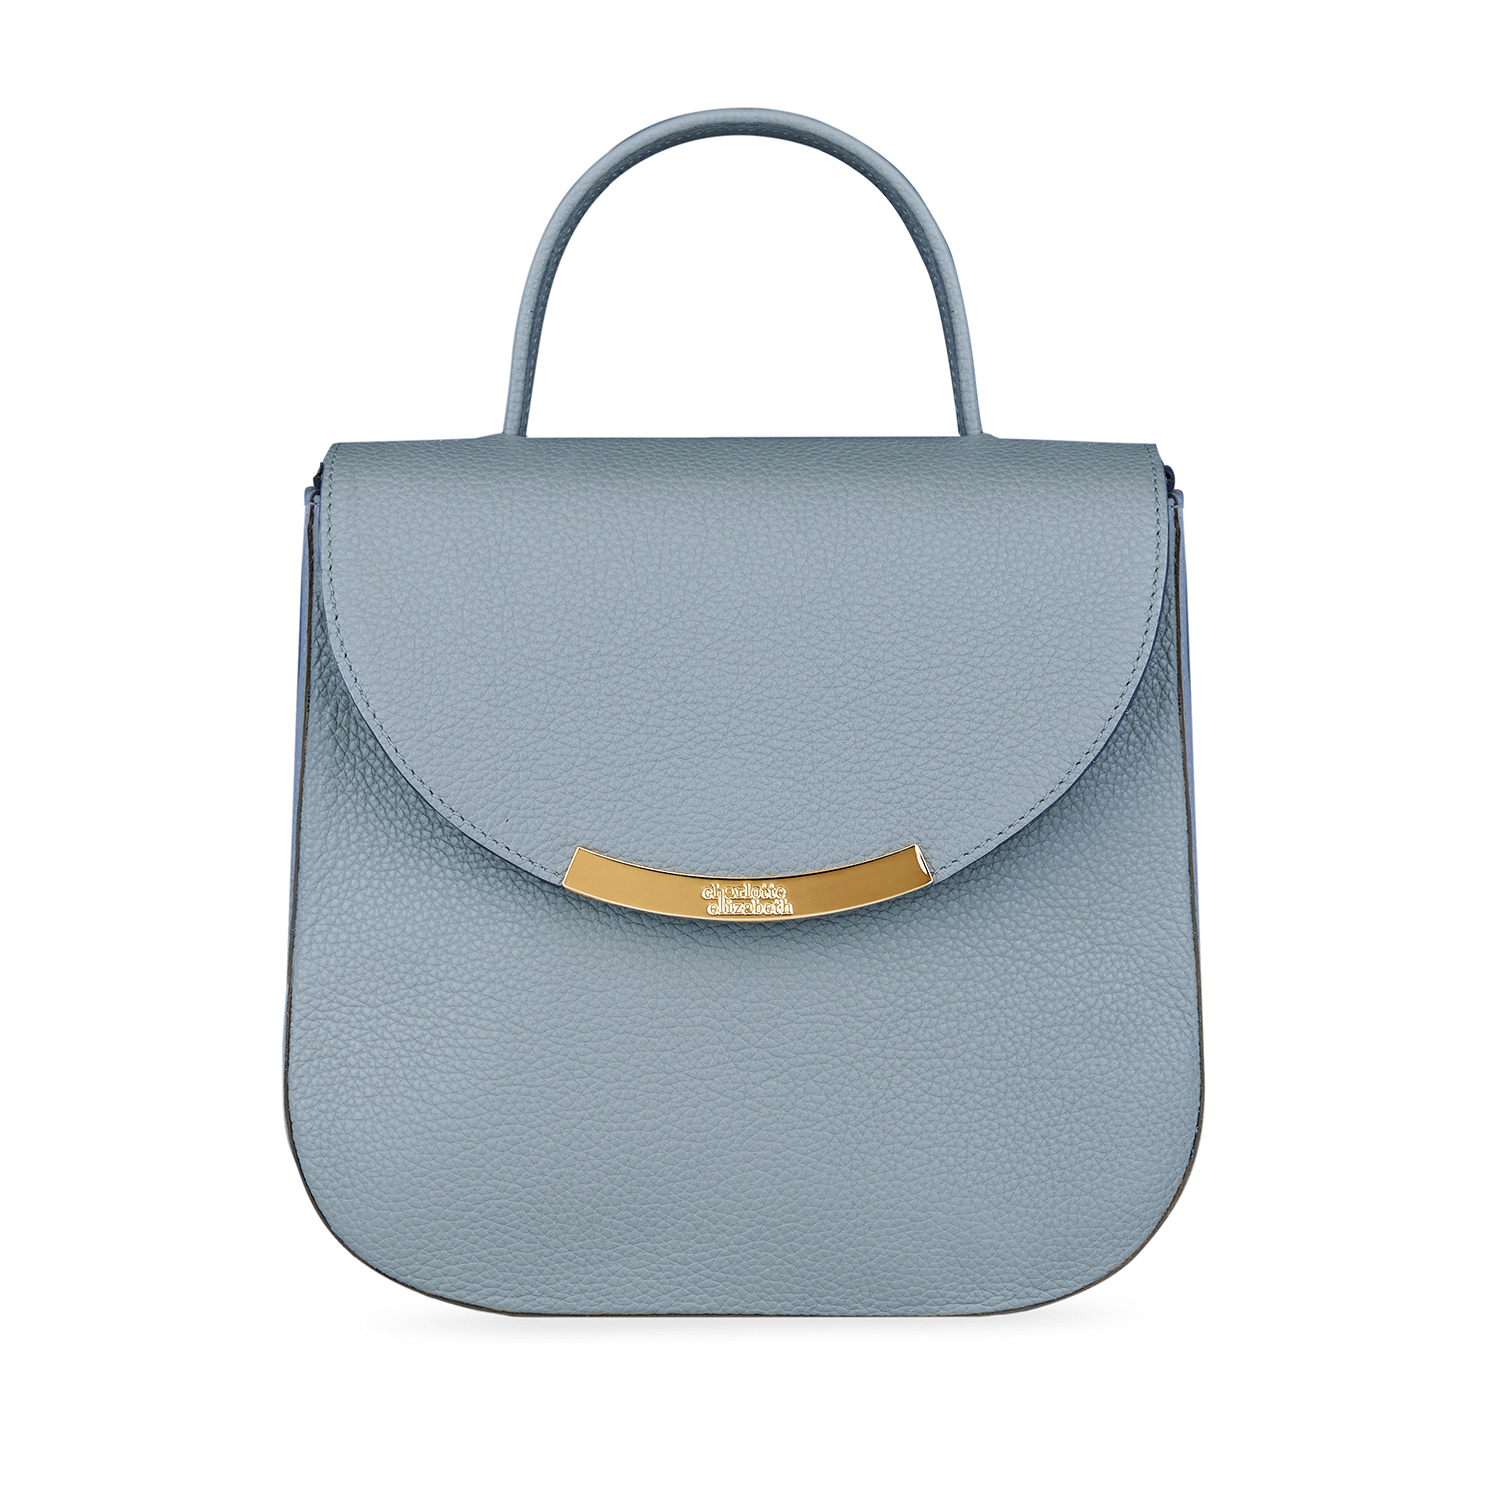 Ladies elegant blue handbag with top handle and gold hardware